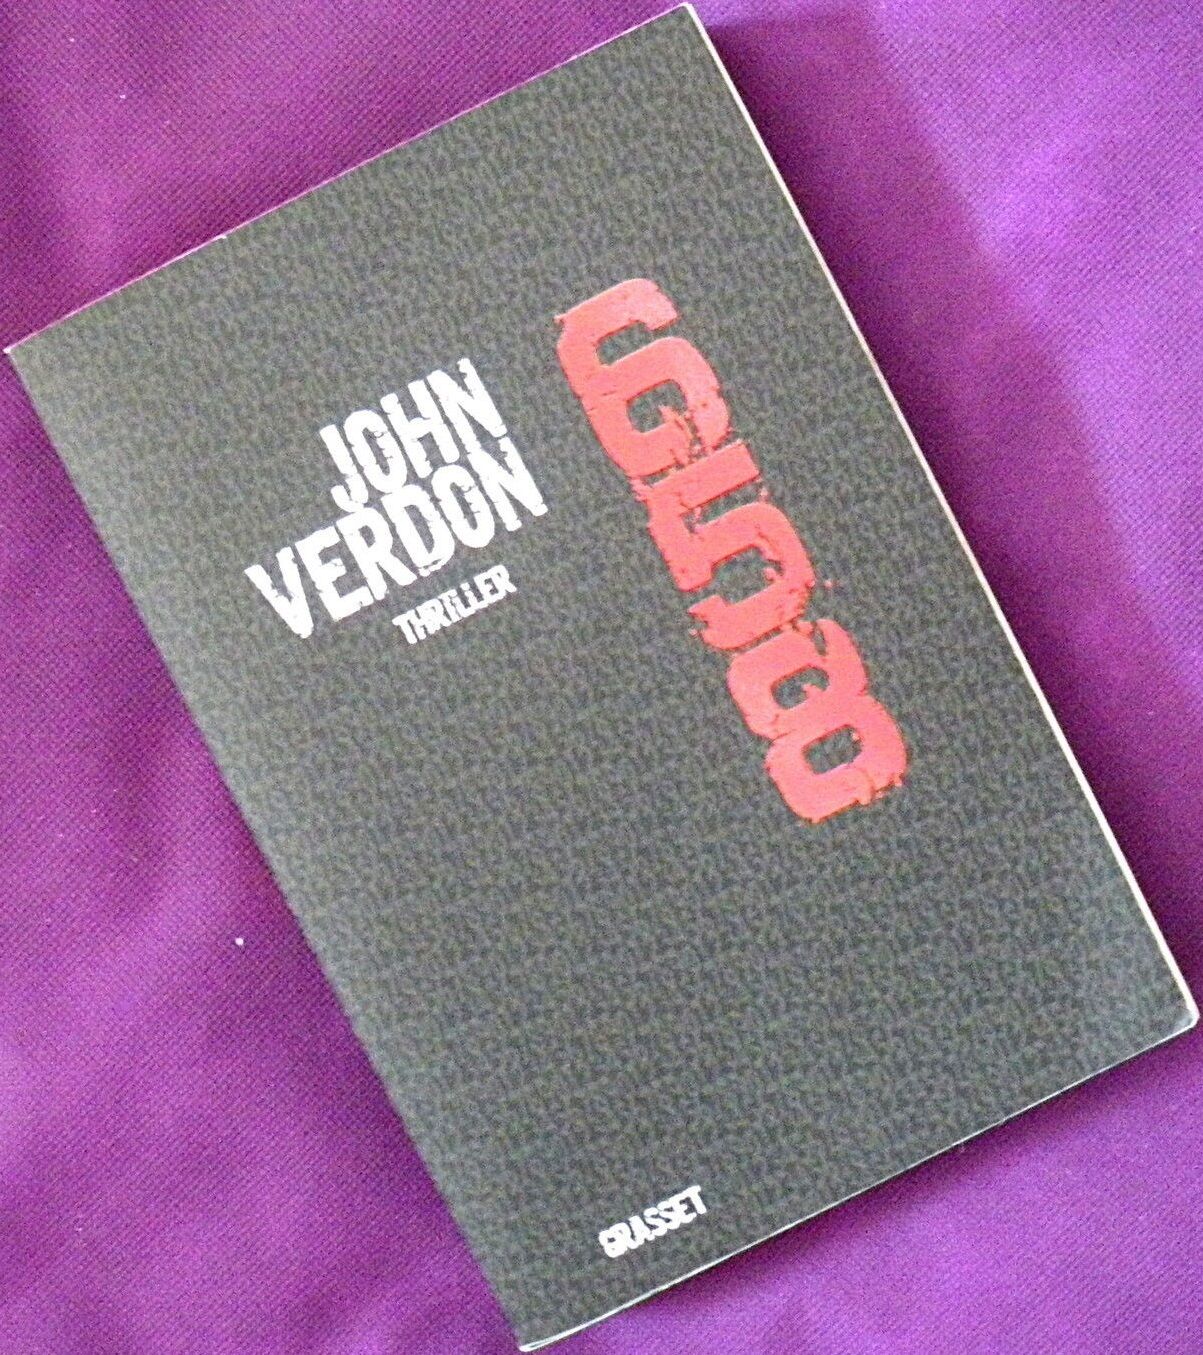 658 - John Verdon (in lingua francese), 2011